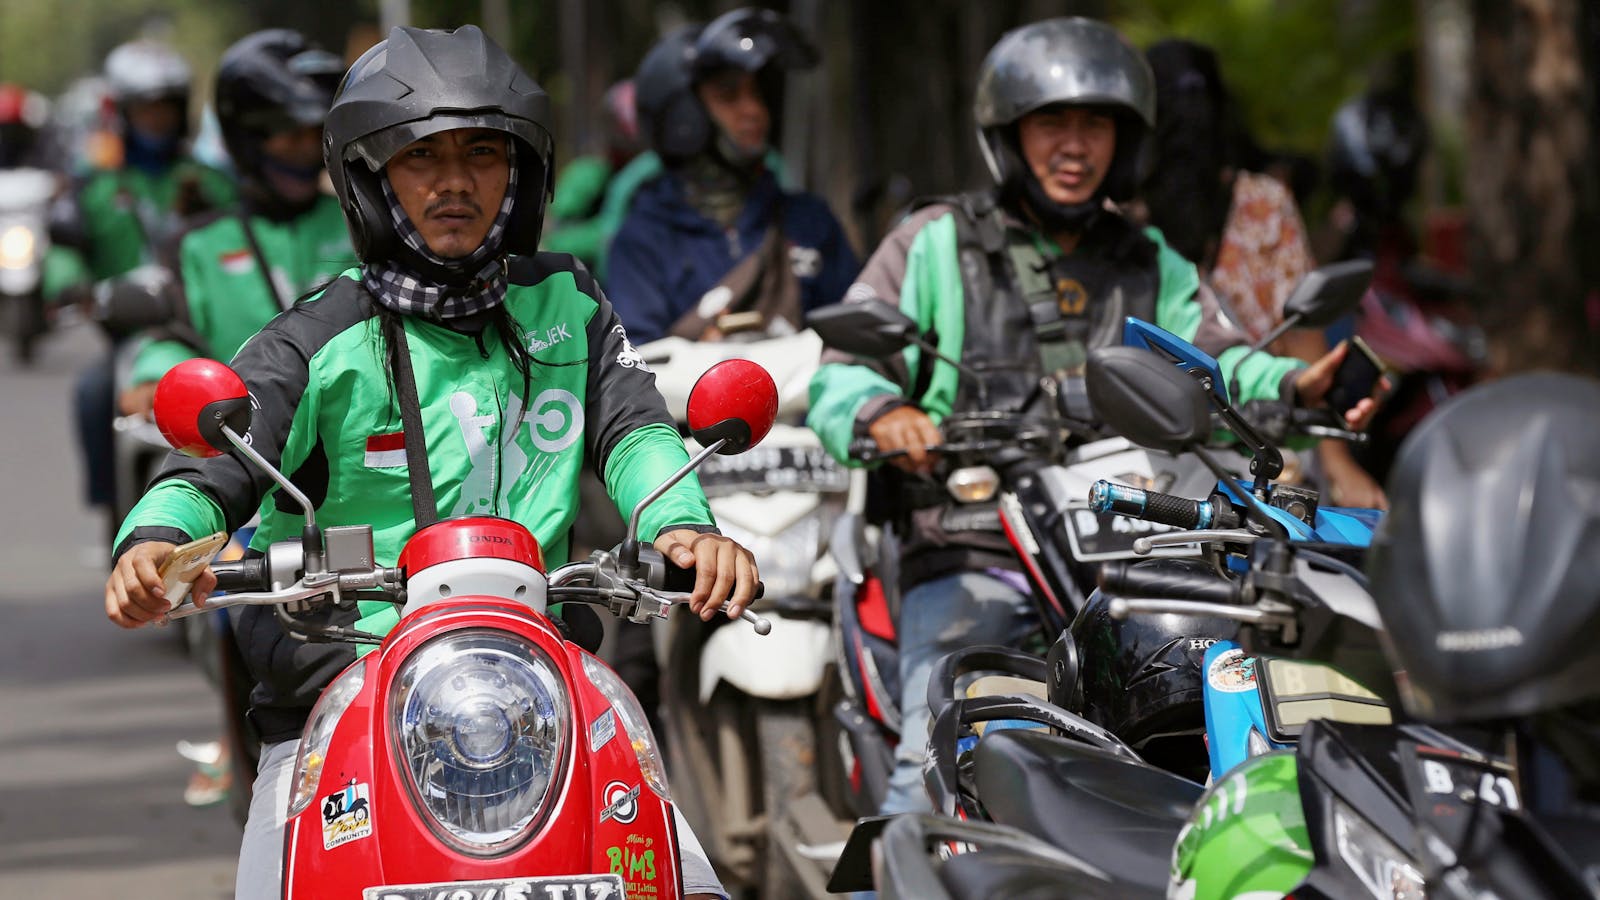 GoJek motorbike riders in Djakarta. Photo by AP